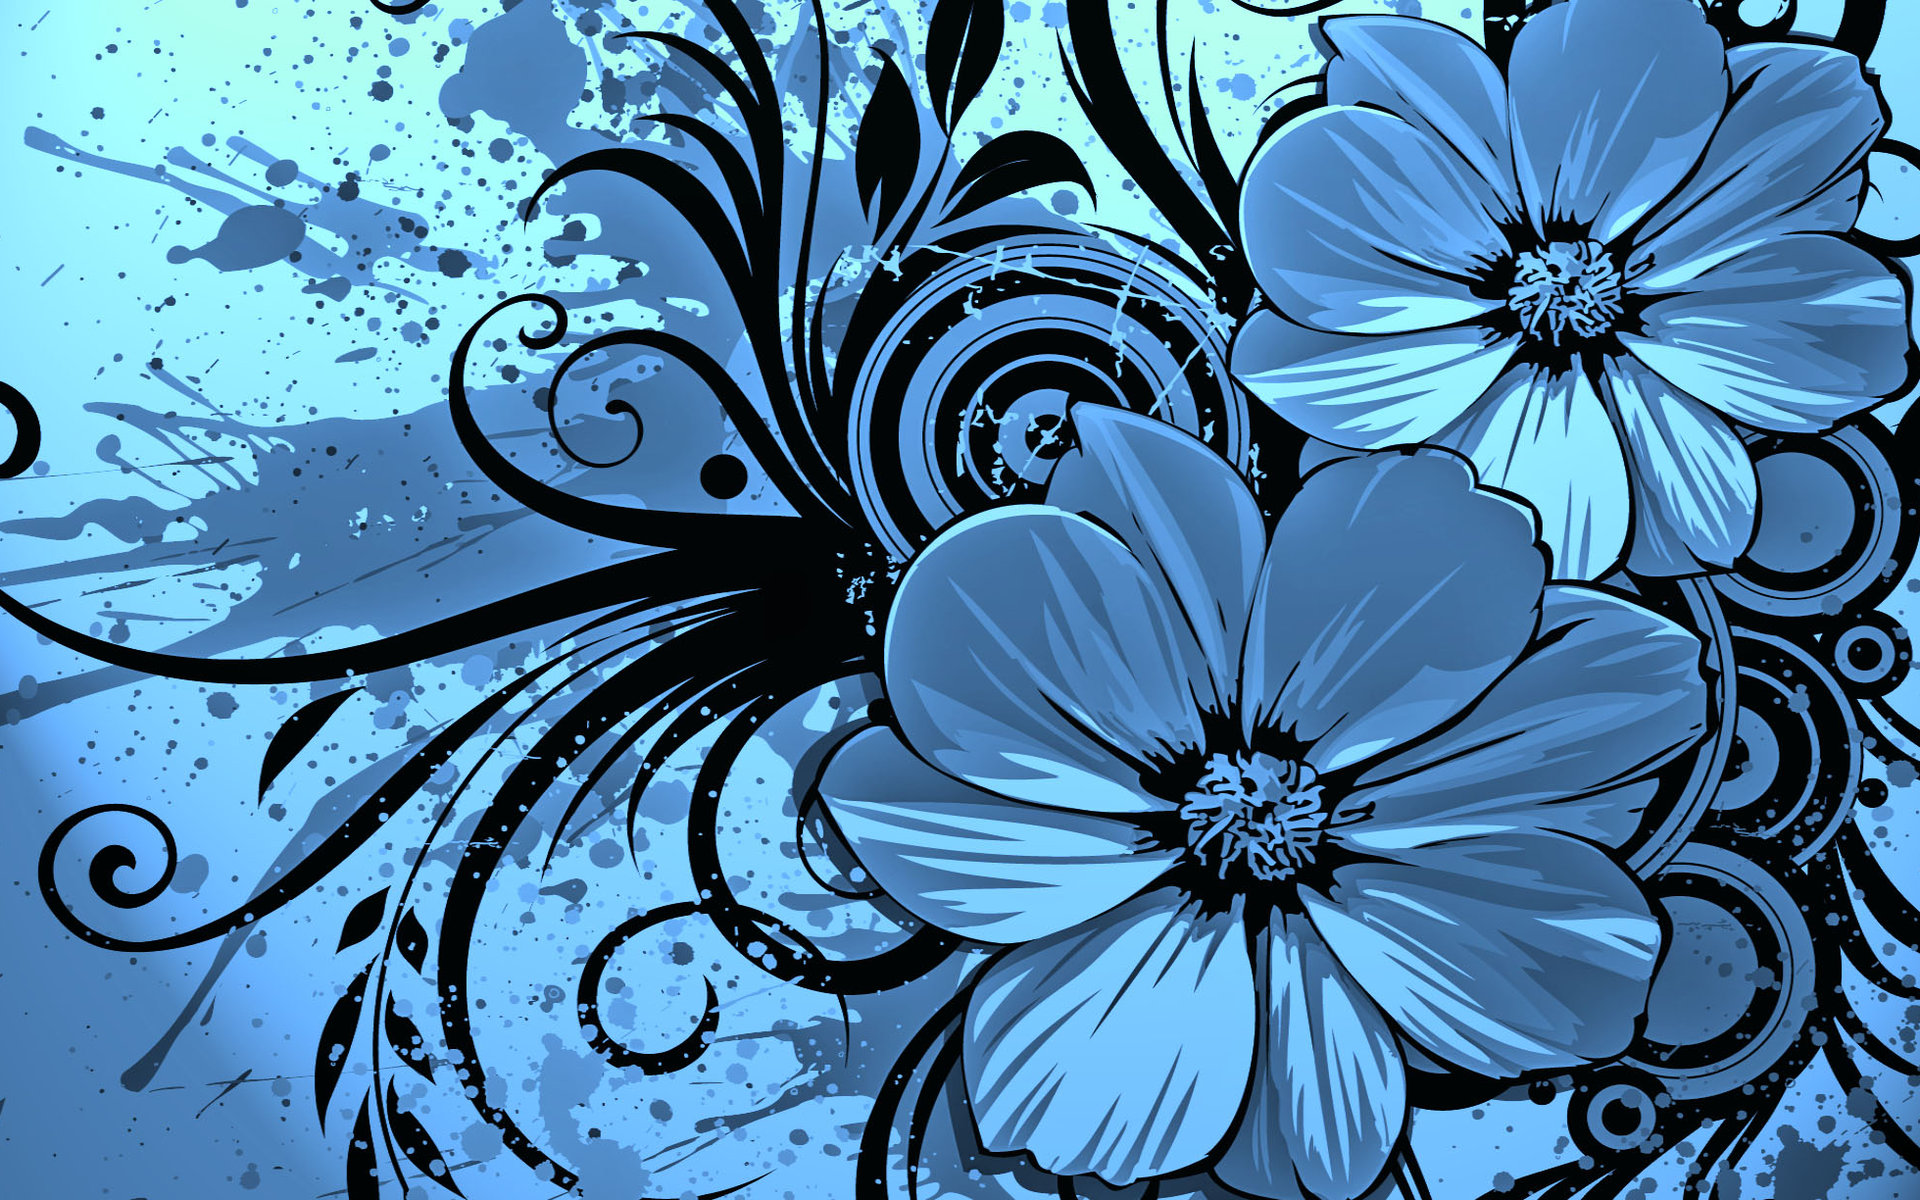 Blue Flower Design